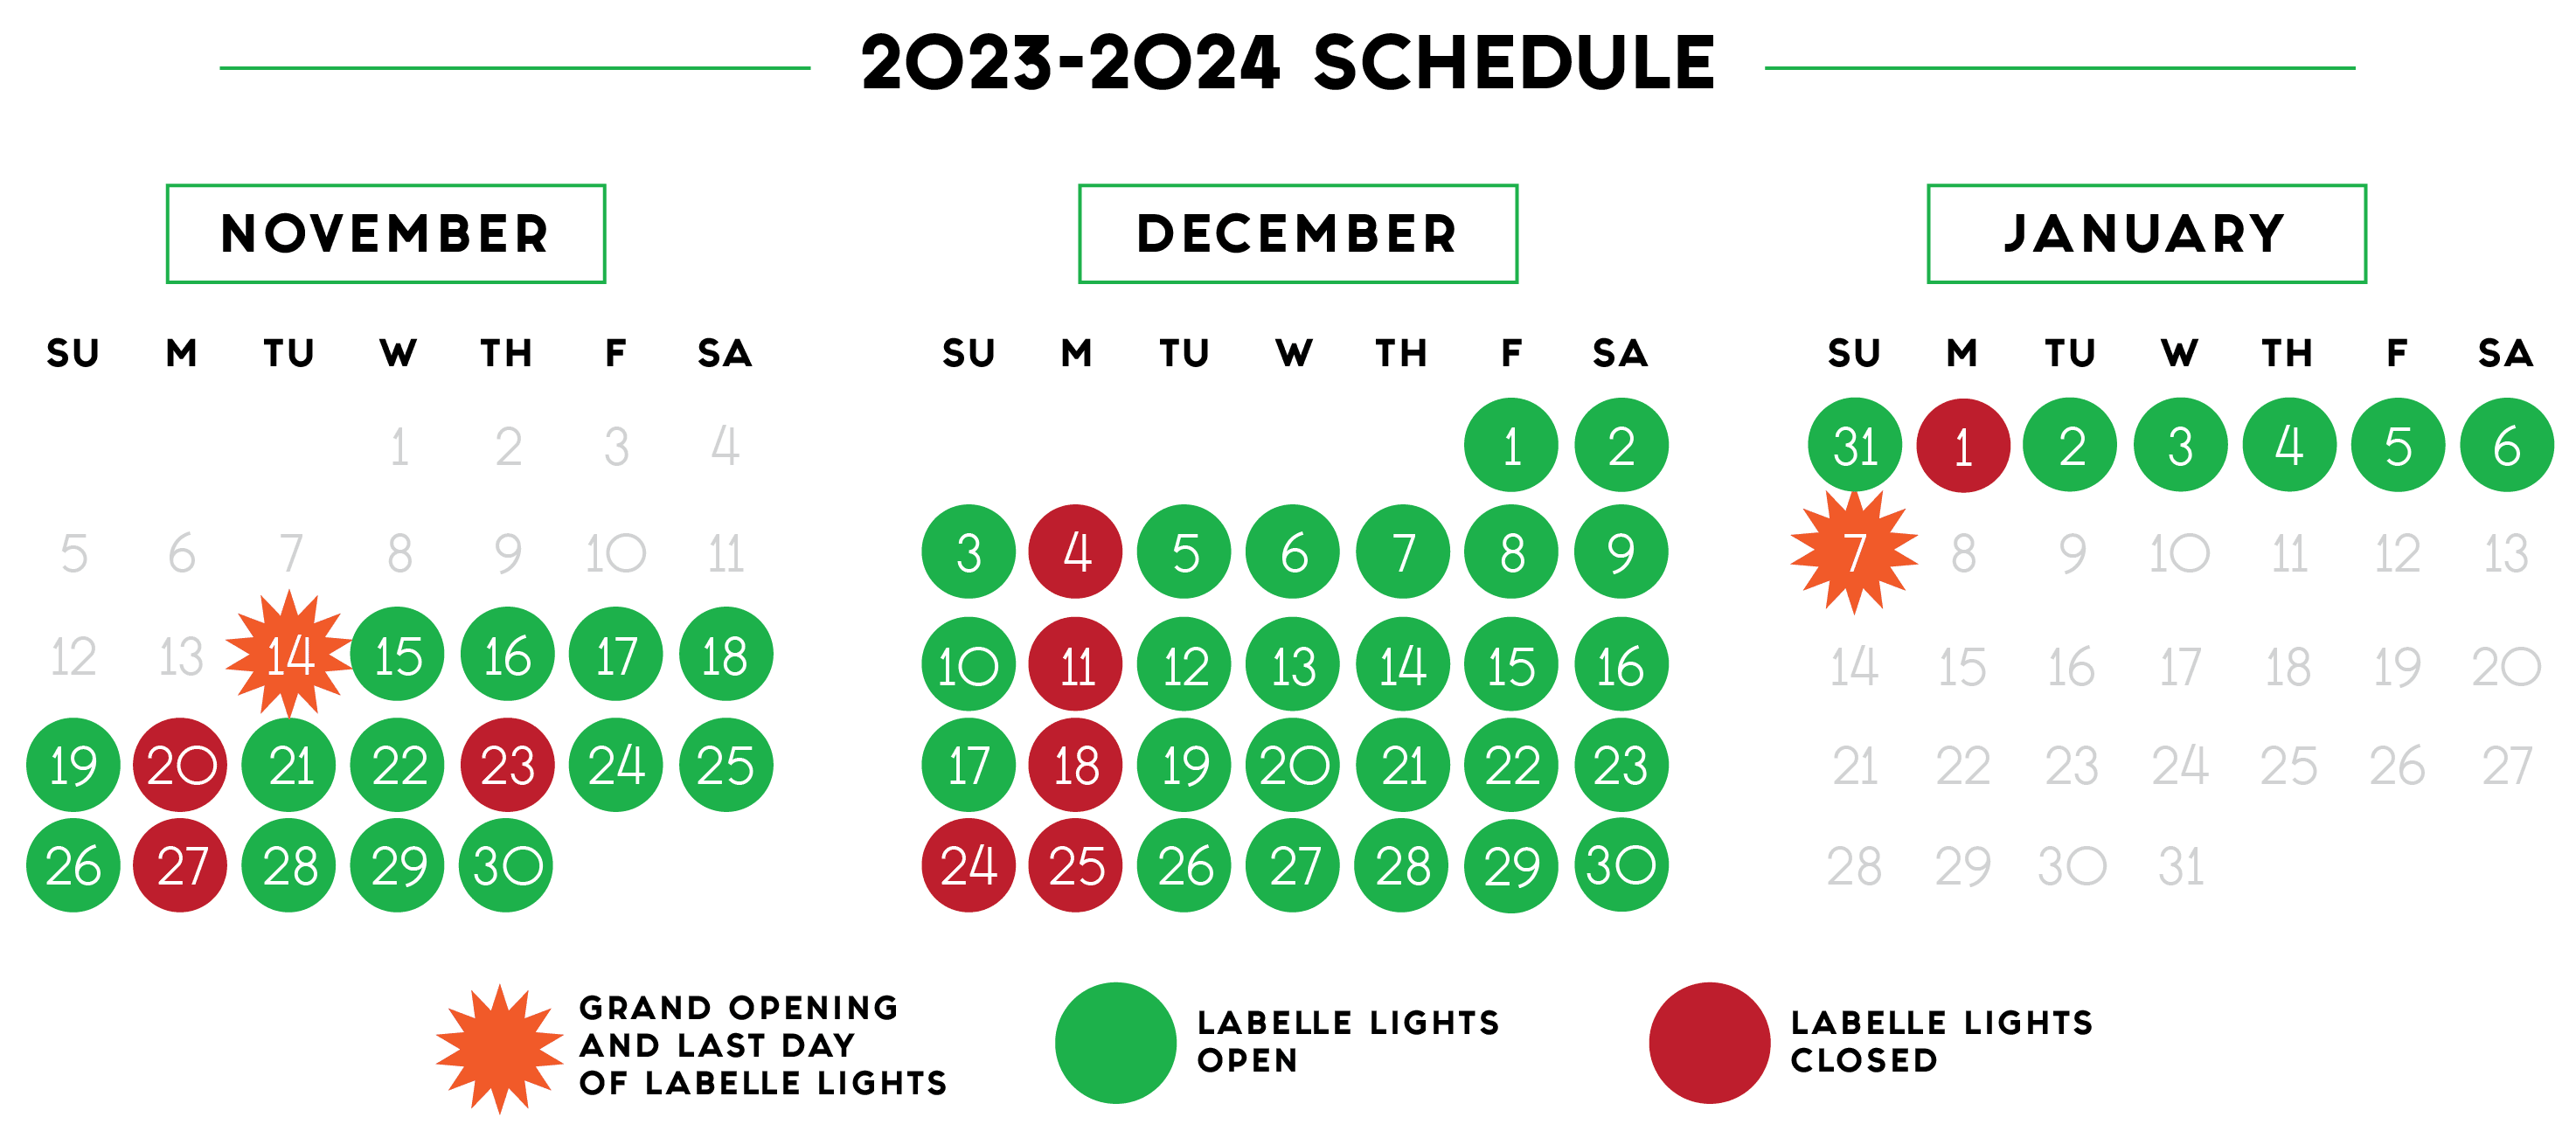 LaBelle Lights Calendar 2023-2024 Season